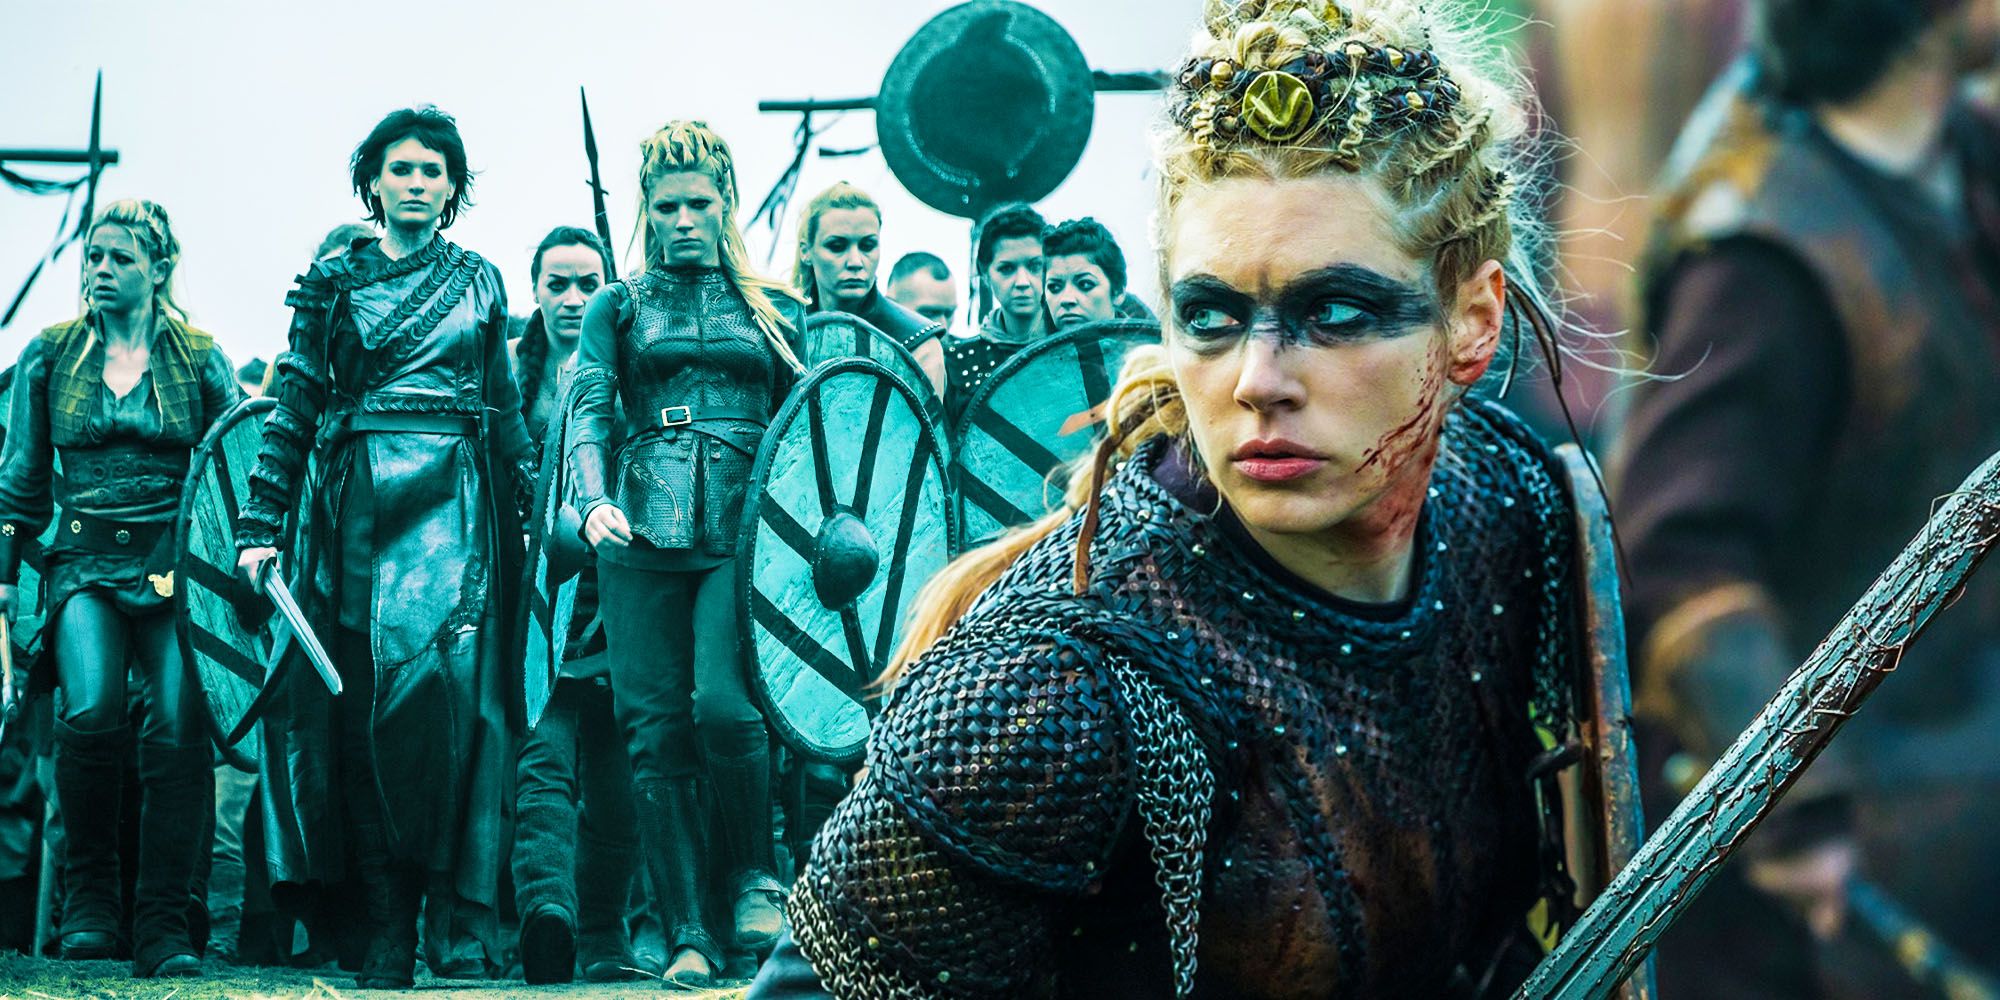 Viking Warrior Women: Did 'Shieldmaidens' Like Lagertha Really Exist?